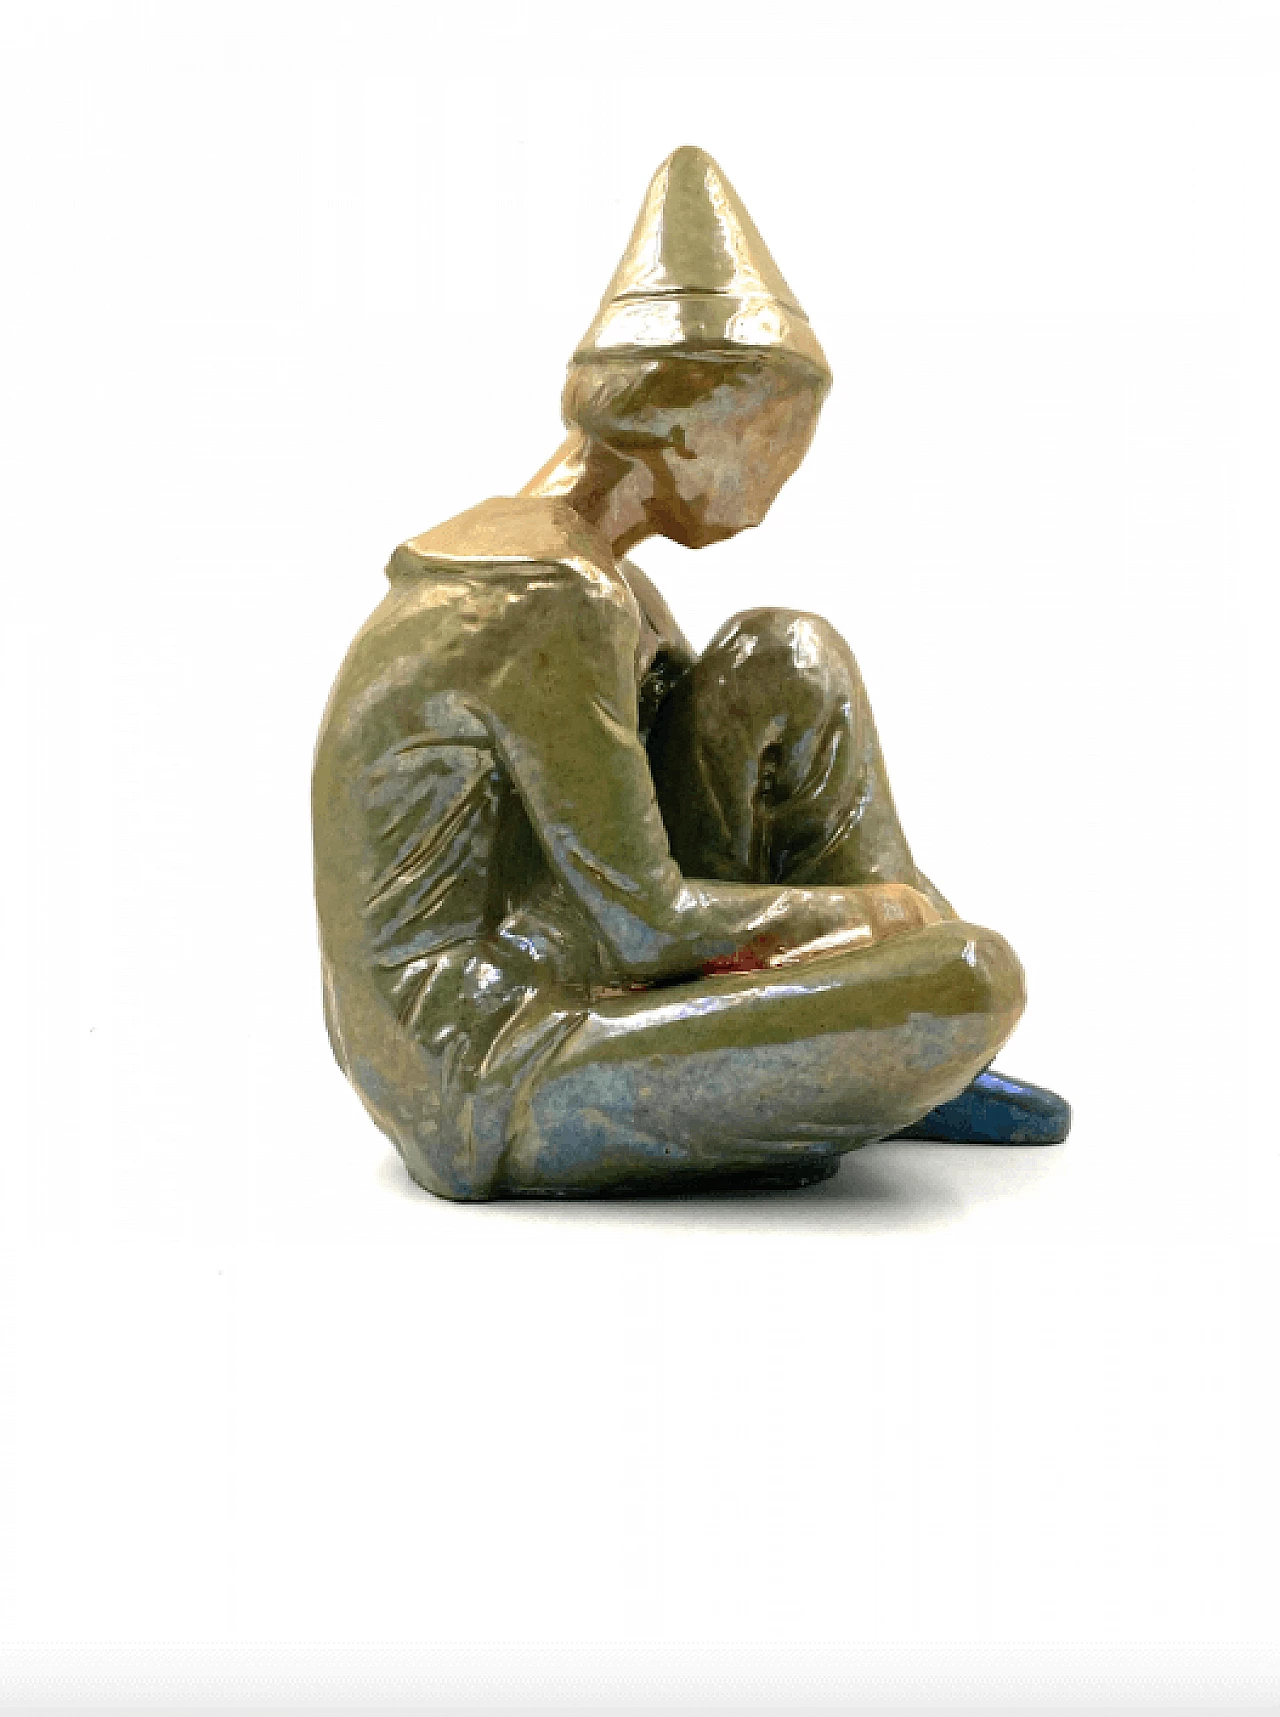 Giordano Tronconi, Seated boy, green ceramic figure from Faenza, 1950s 60